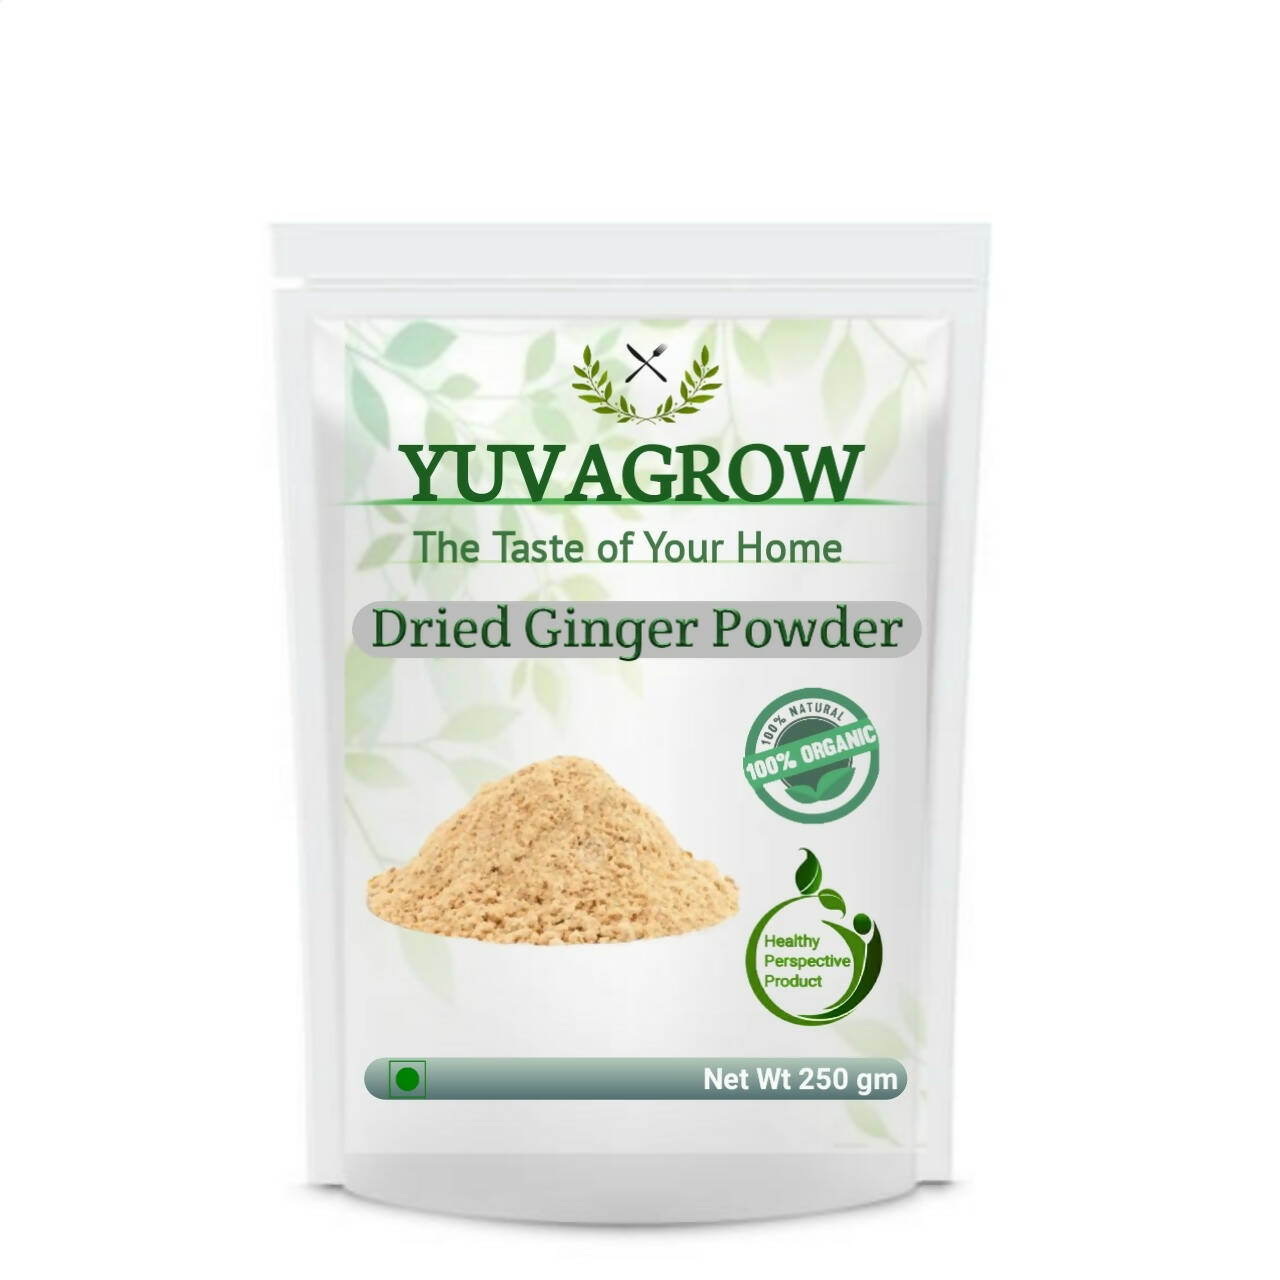 Yuvagrow Dried Ginger Powder - buy in USA, Australia, Canada